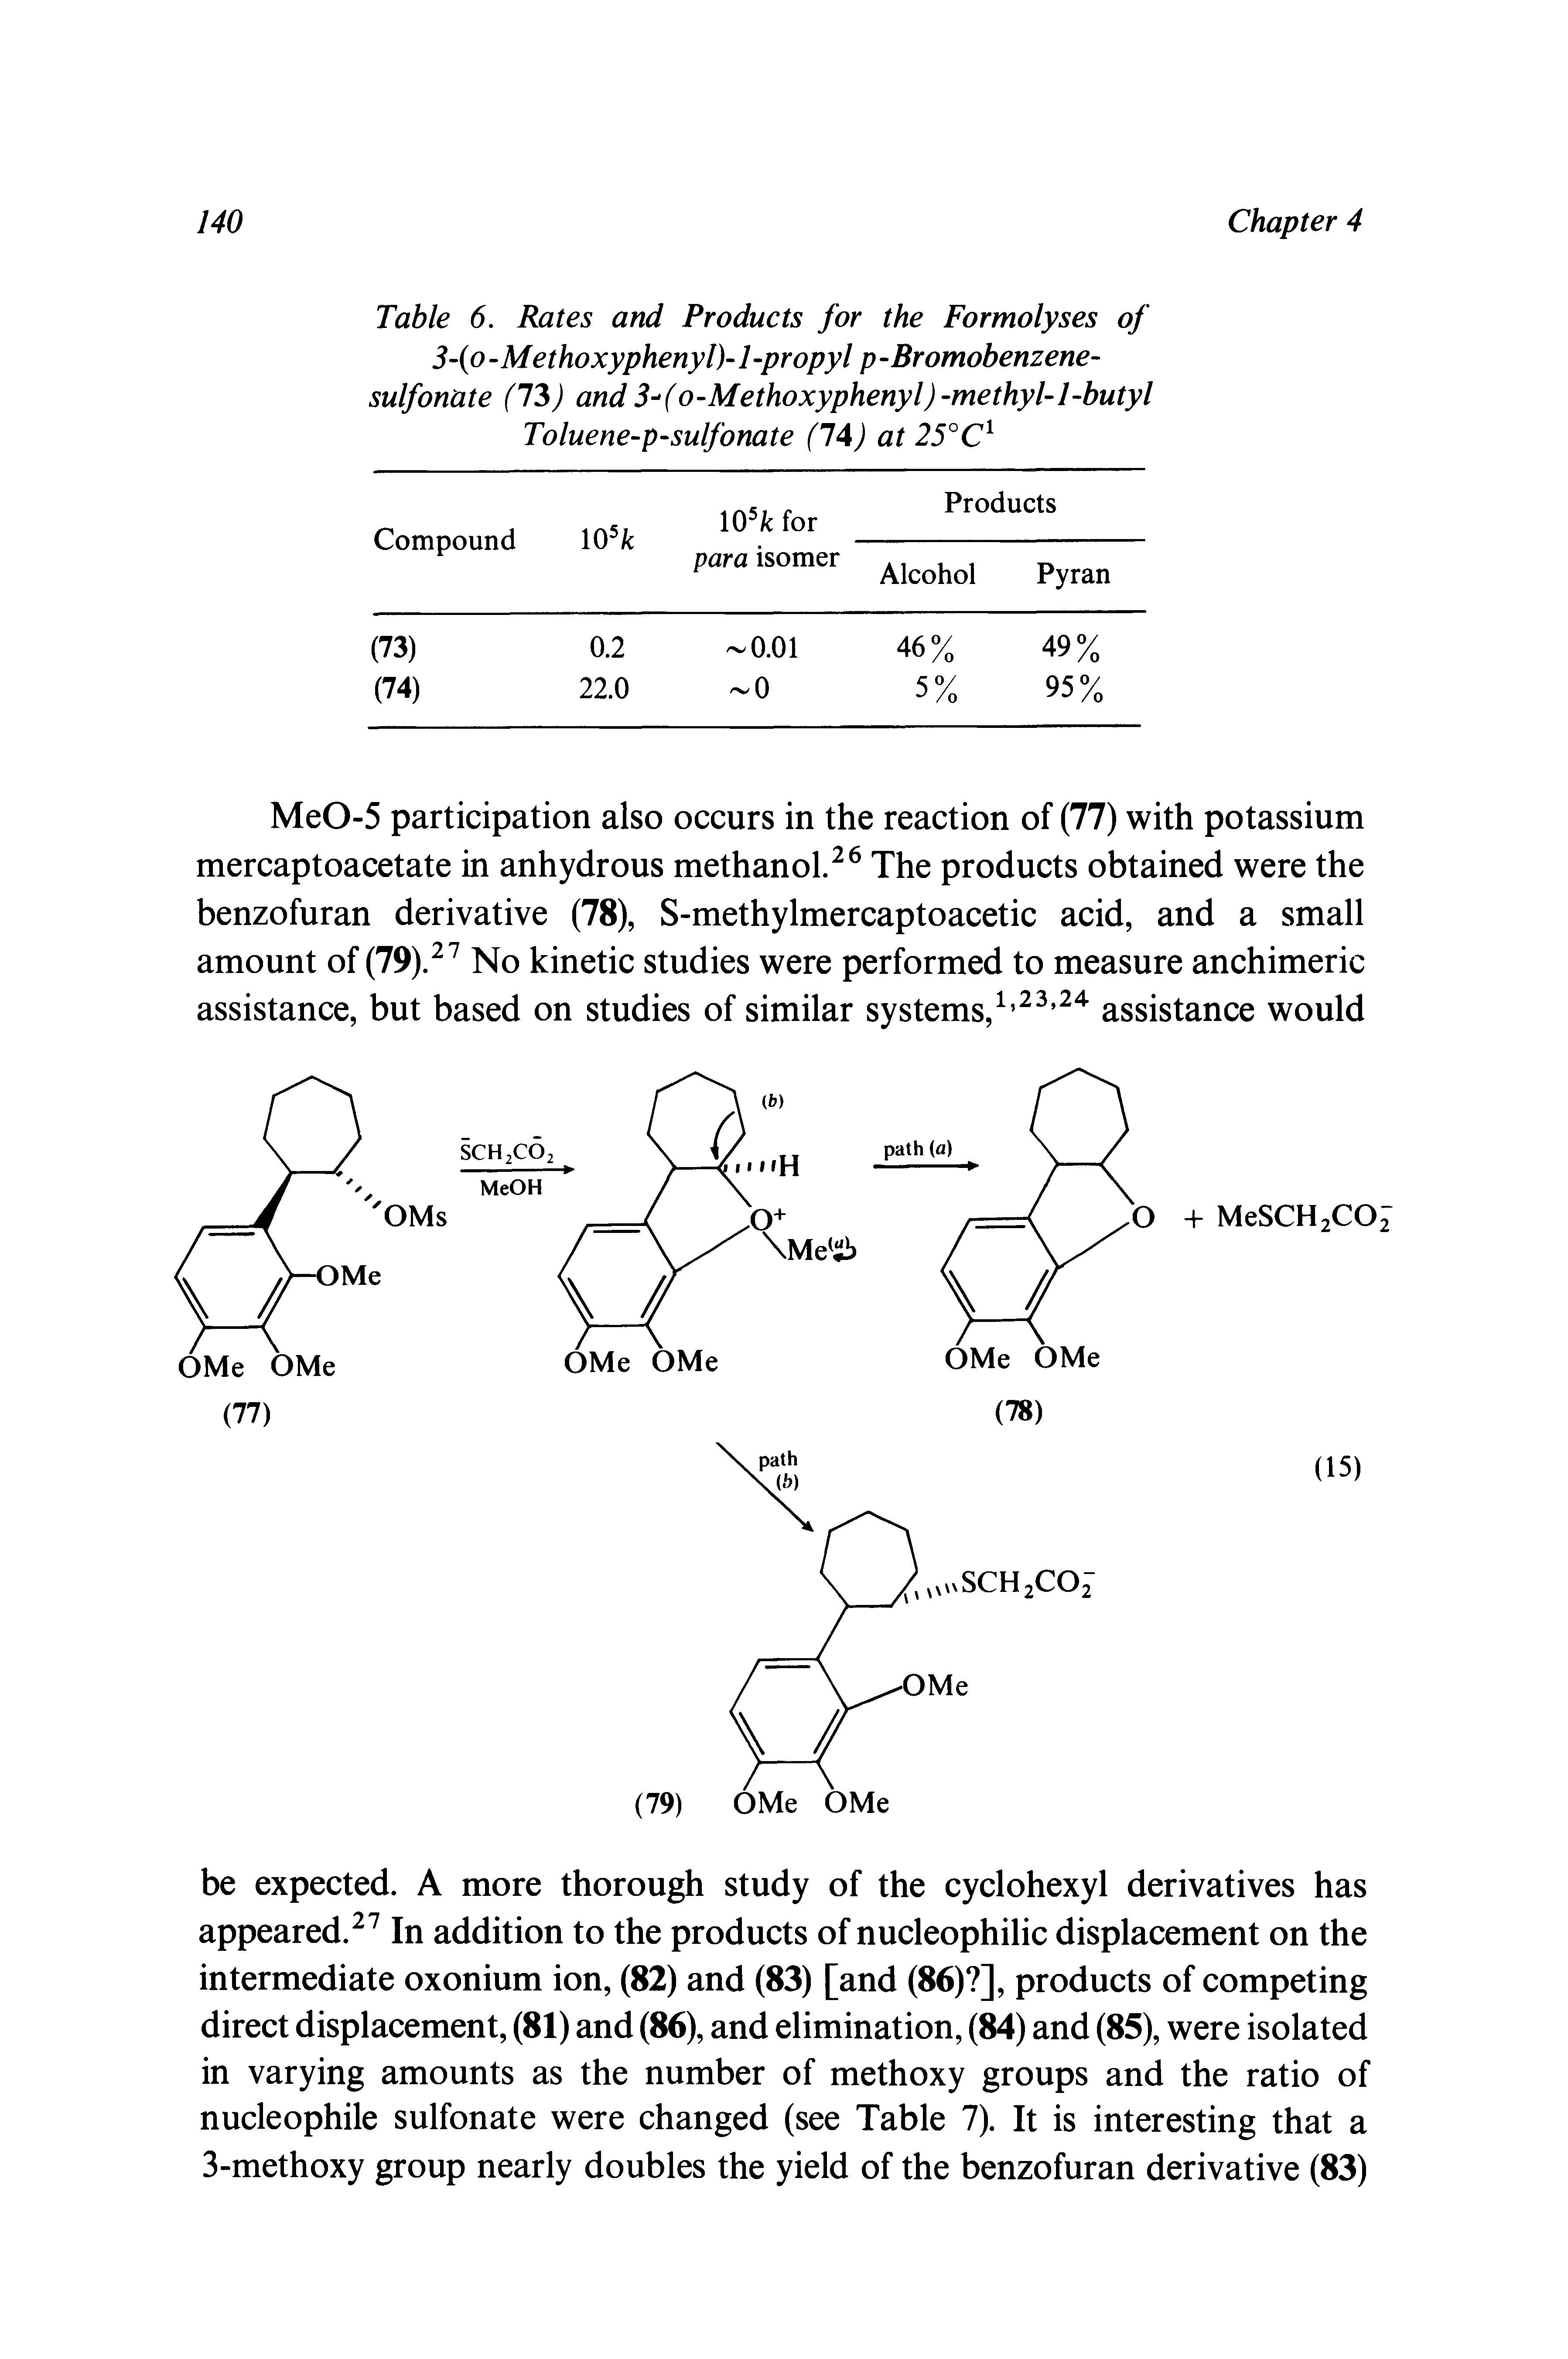 Table 6. Rates and Products for the Formolyses of 3-(o-Methoxyphenyl)-l-propyl p-Bromobenzene-sulfonate (7i) and3-(o-Methoxyphenyl)-methyl-I-butyl Toluene-p-sulfonate (74) at 25°C ...